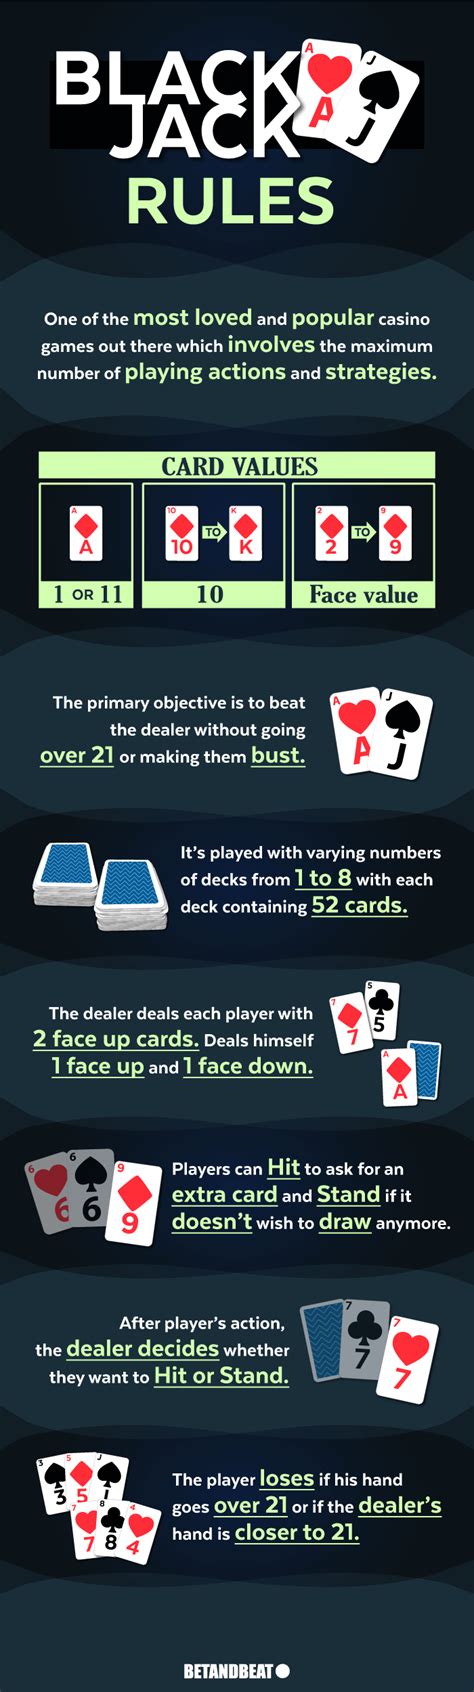 blackjack card games rules buql